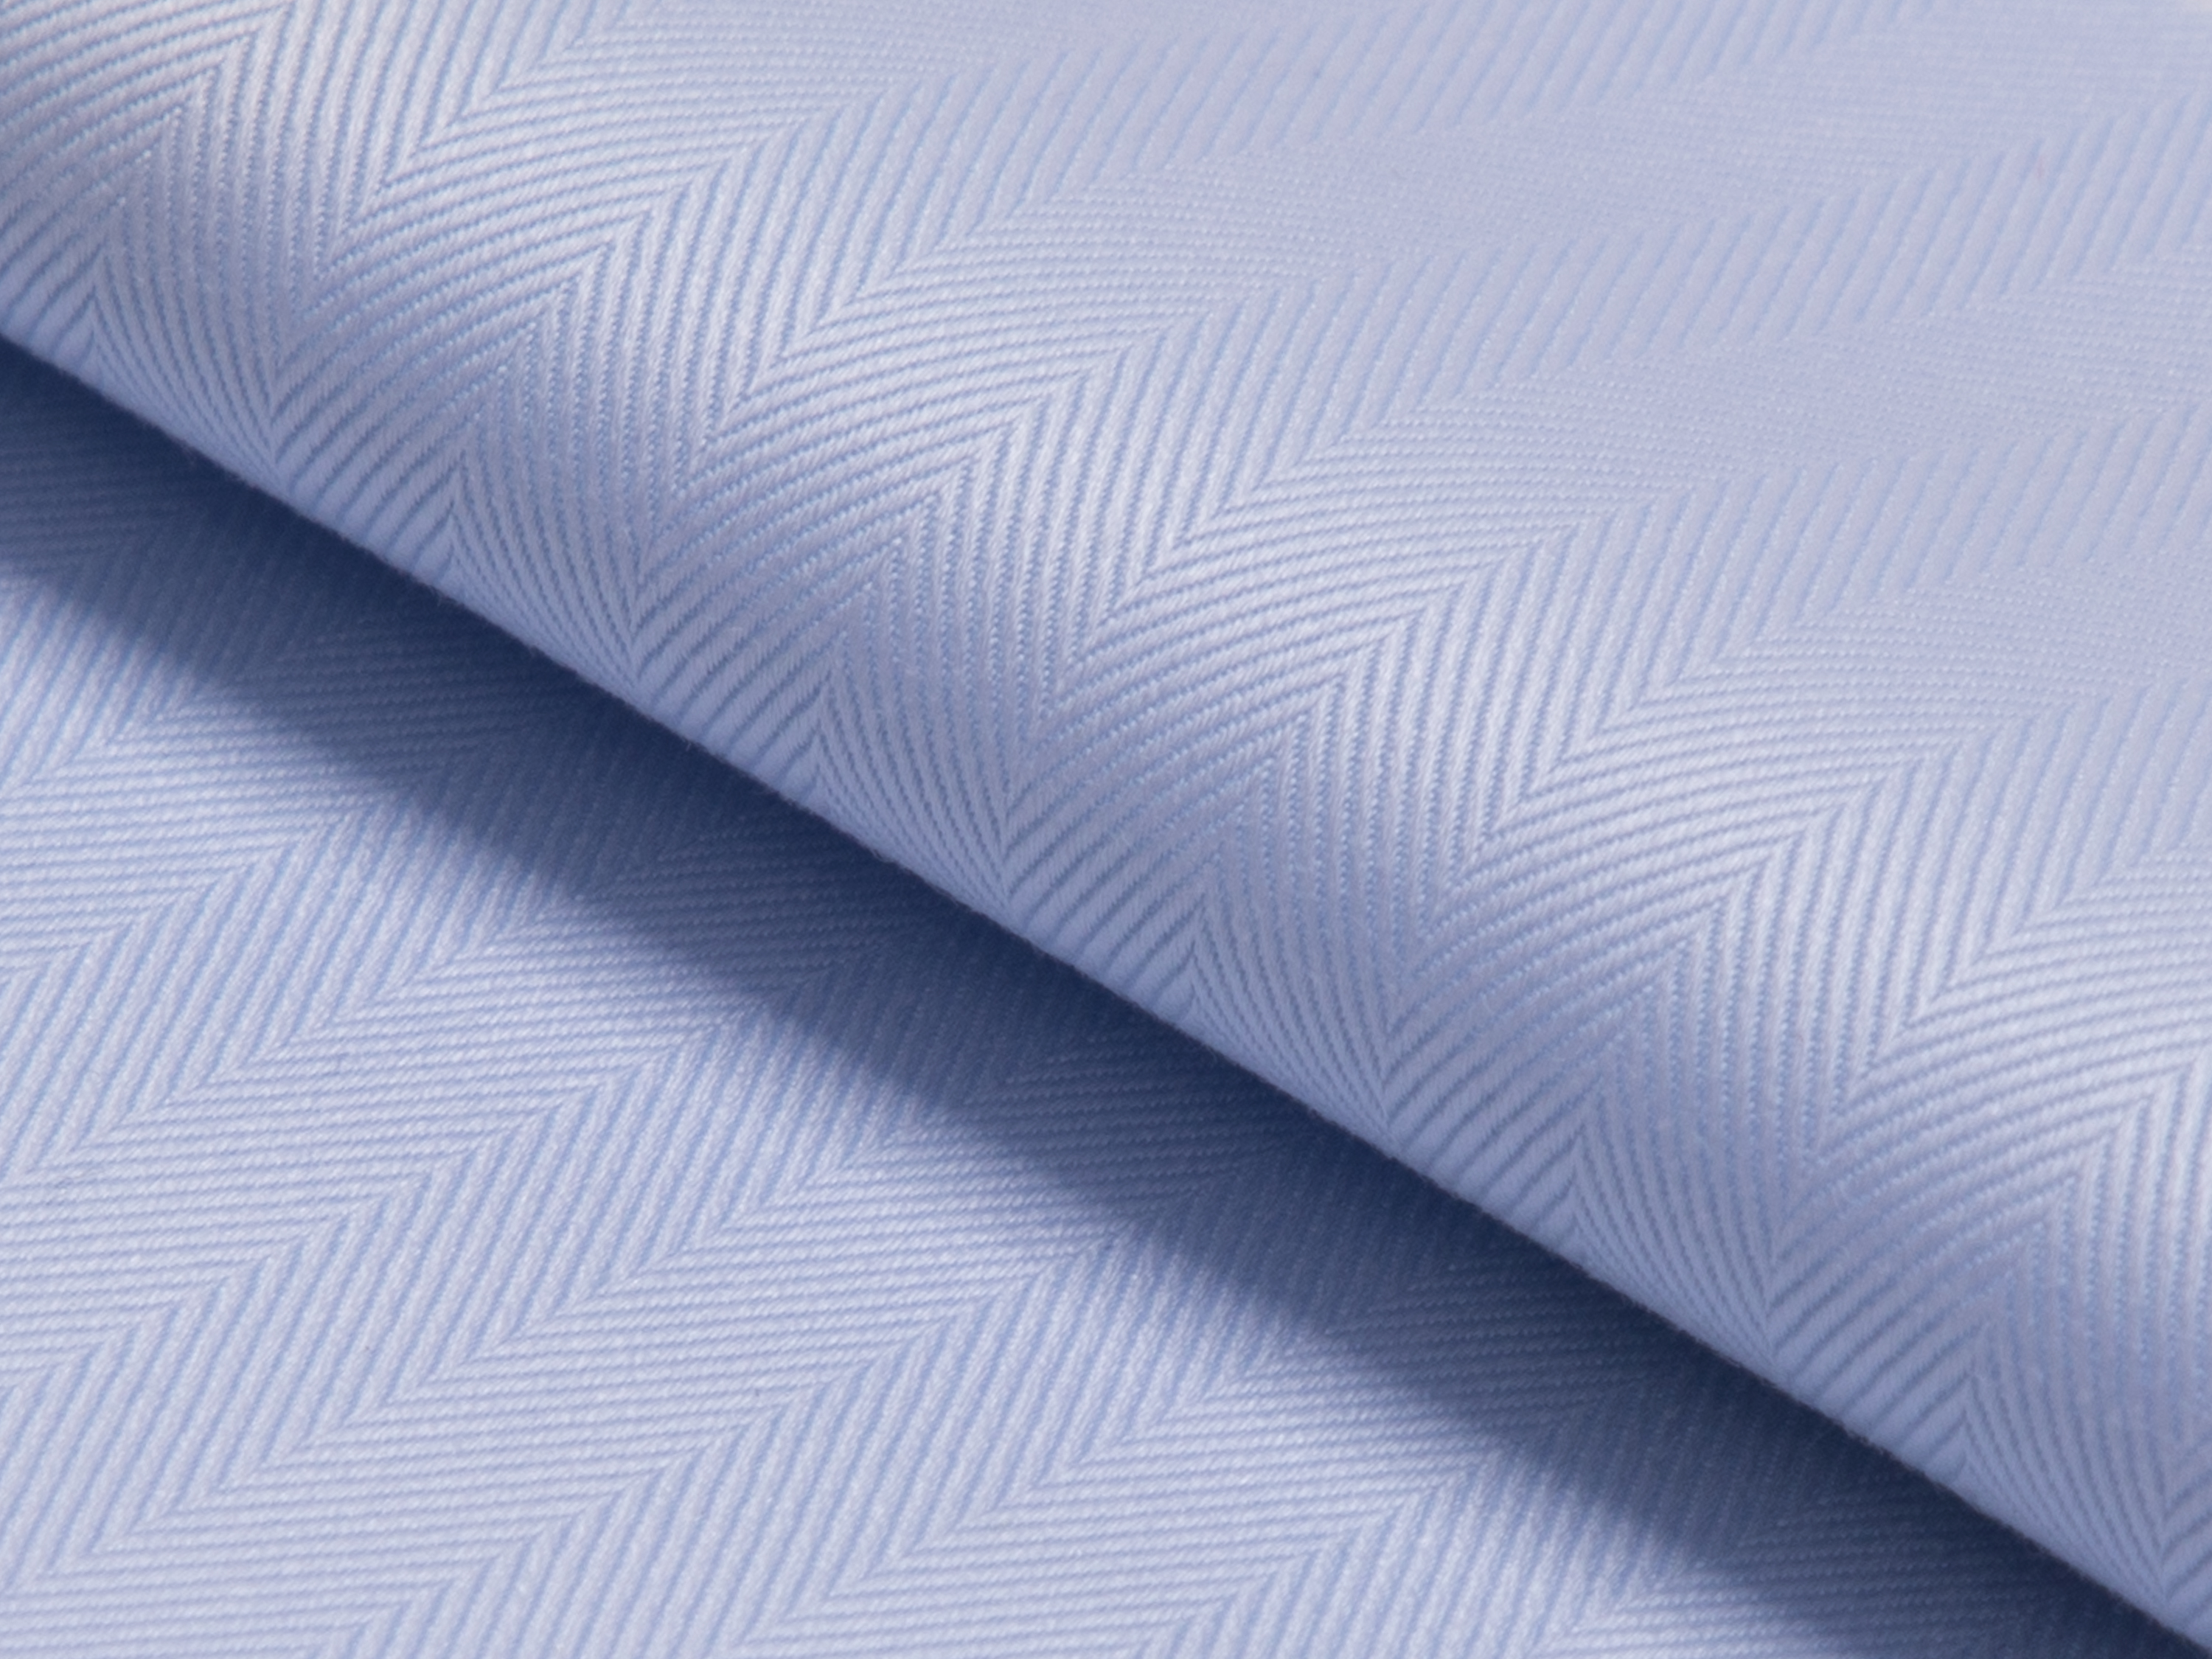 Buy tailor made shirts online - MAYFAIR - Herringbone Light Blue